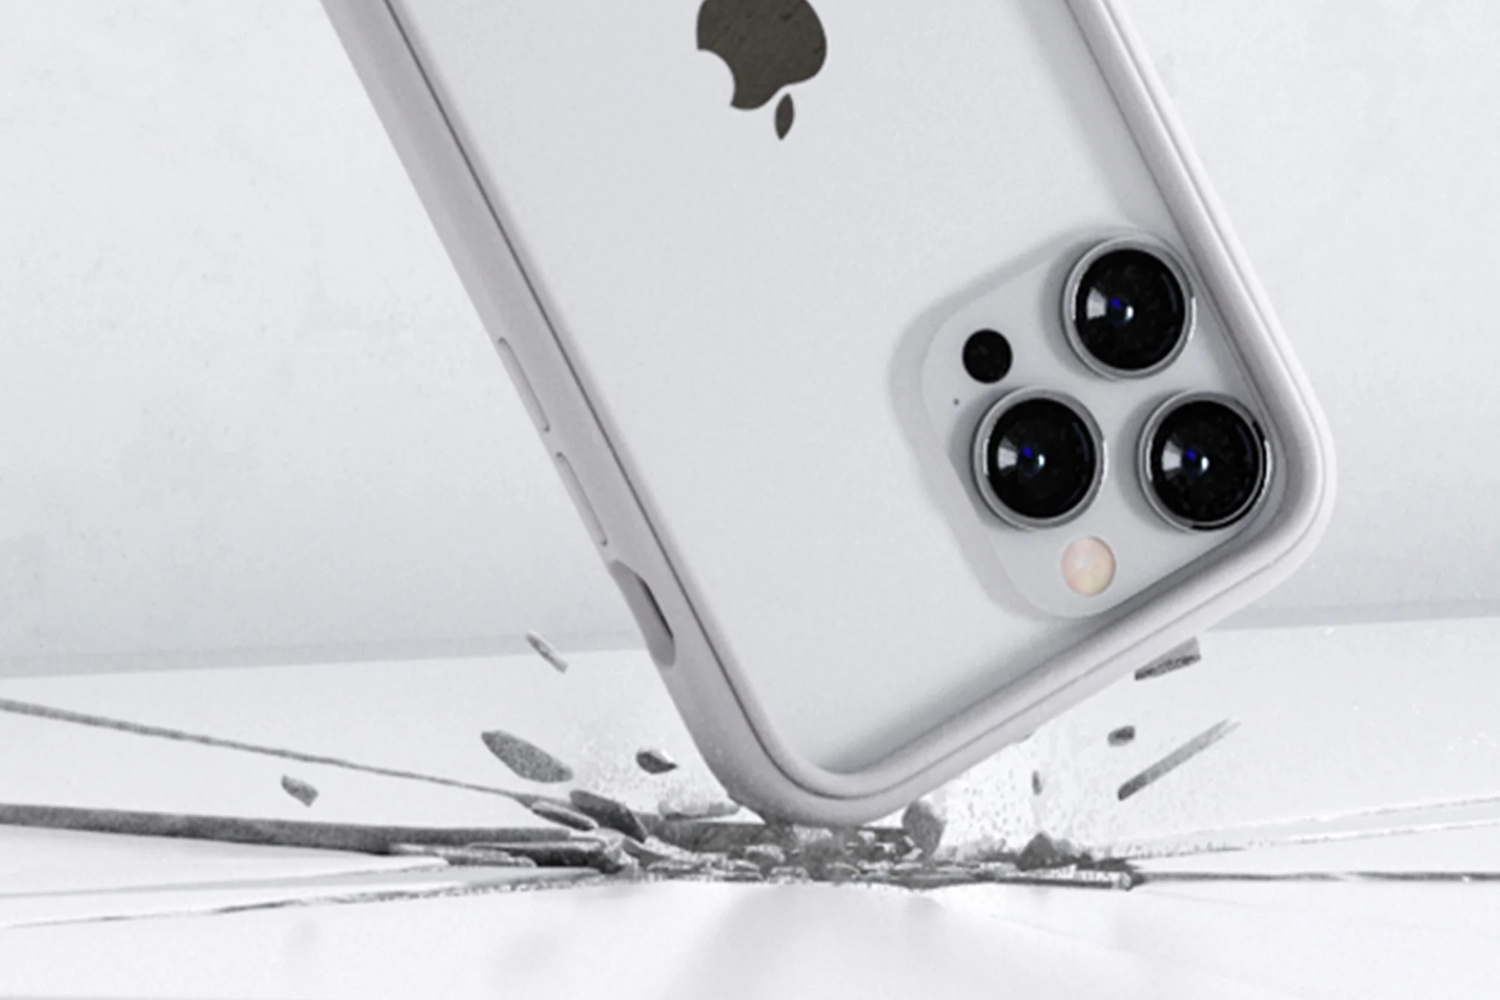 Apple iPhone 15 Pro Max Ultra Hybrid Case Spigen - Matte Black